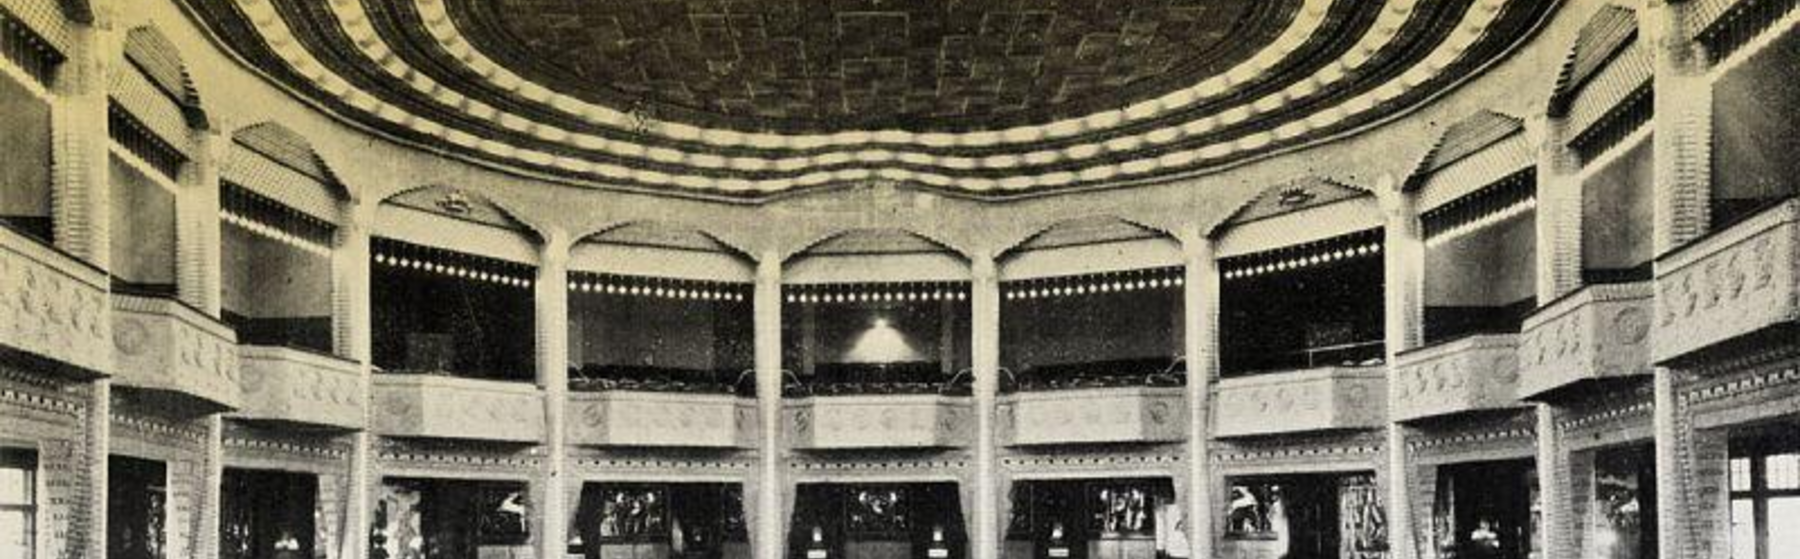 Union-Theater (U.T.-Lichtspiele)